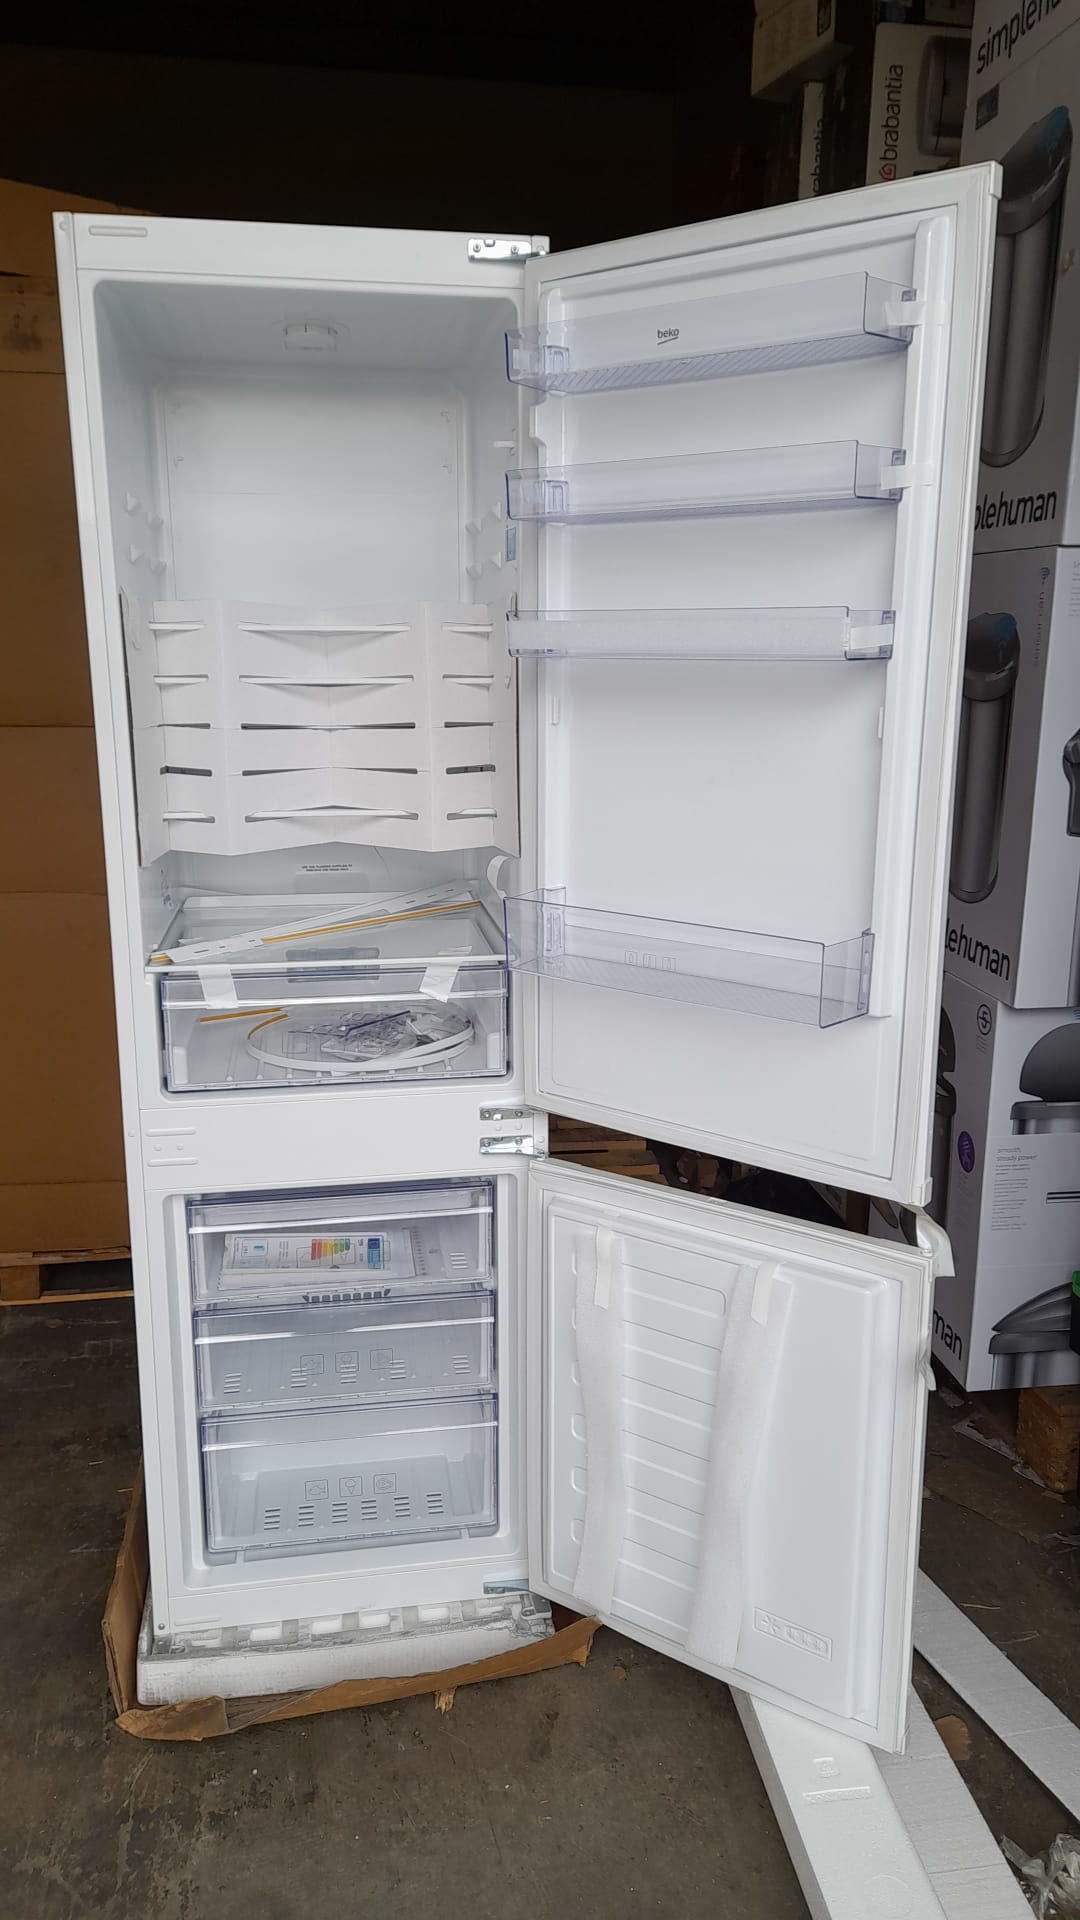 Beko BCB7030F 70:30 White Integrated Frost free Fridge freezer 4722-3605